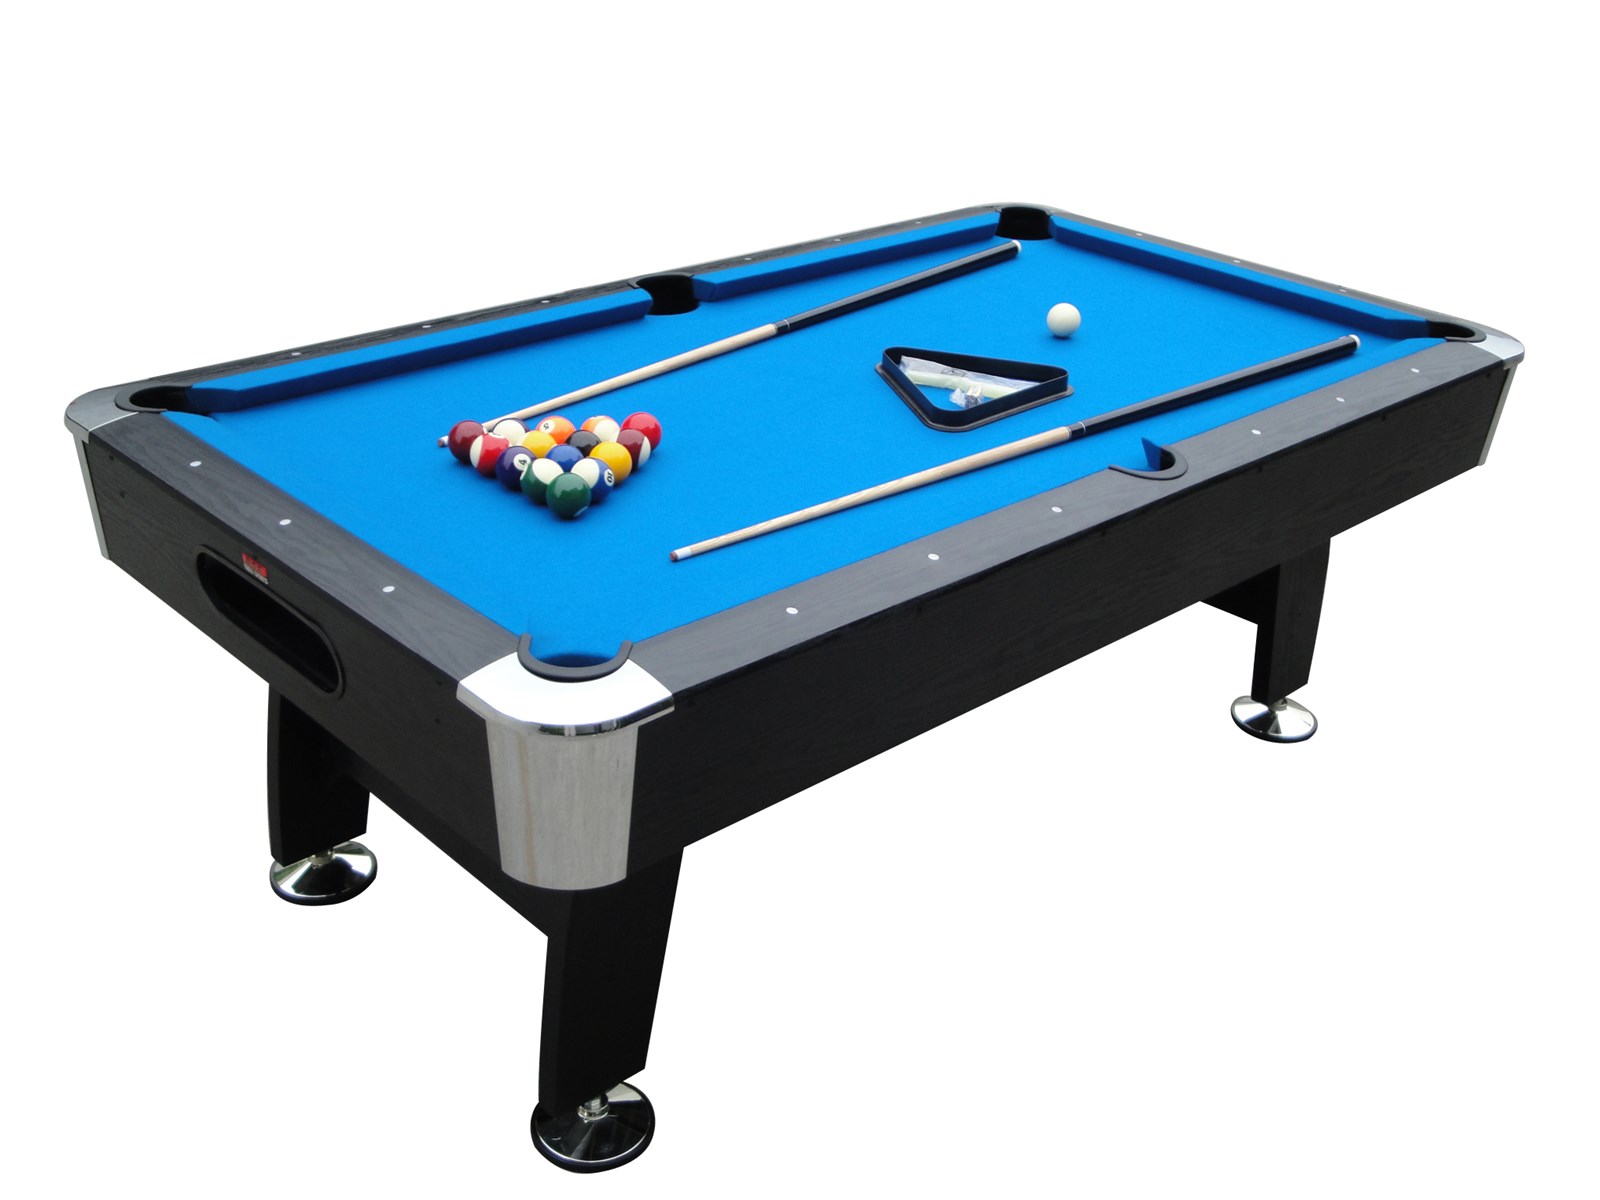 Jiuxing 912 7ft slate commercial pool table billiard